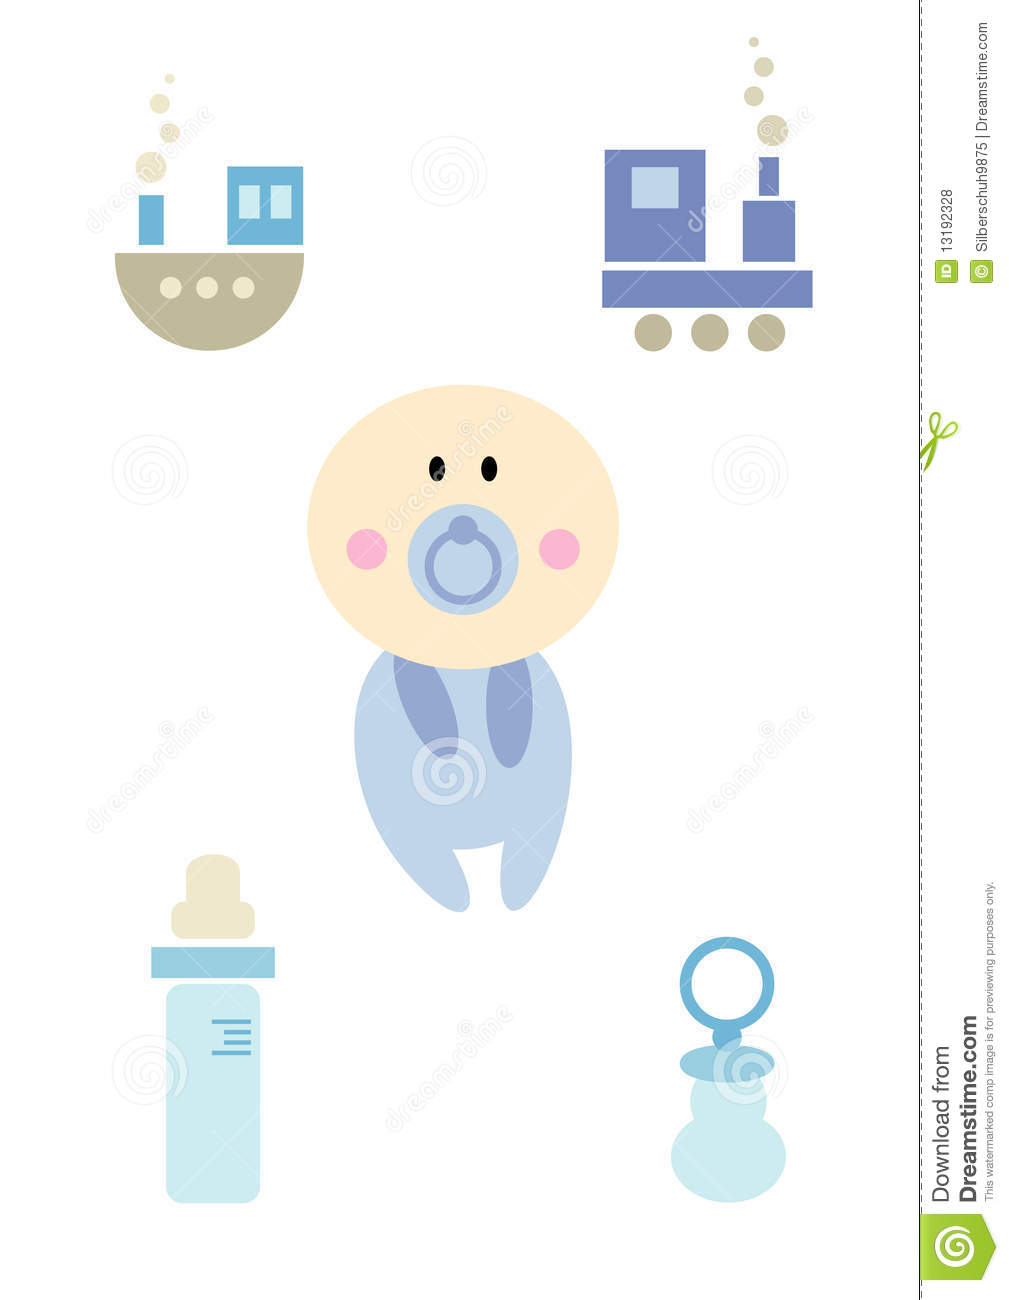 Clipart Set  Baby Boy  Blue  Royalty Free Stock Photos   Image